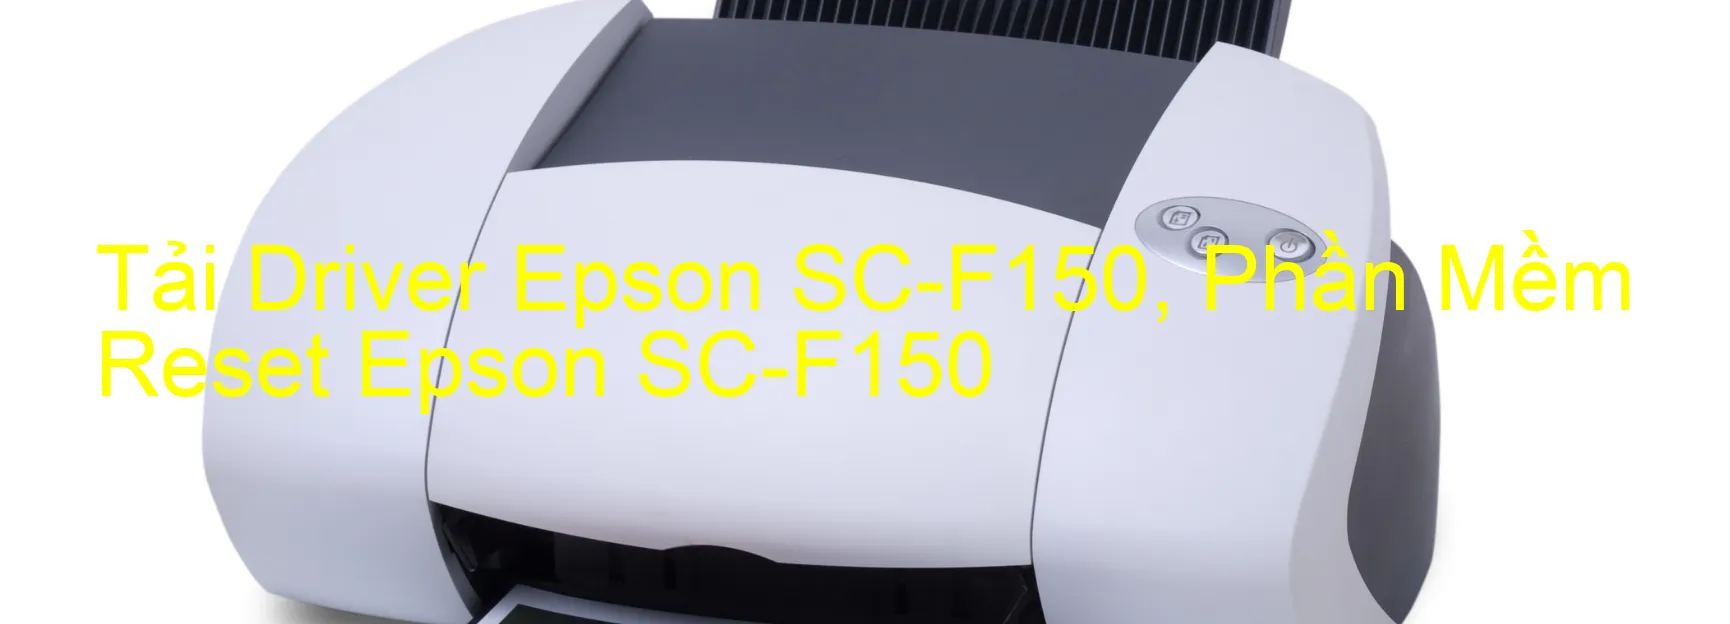 Driver Epson SC-F150, Phần Mềm Reset Epson SC-F150